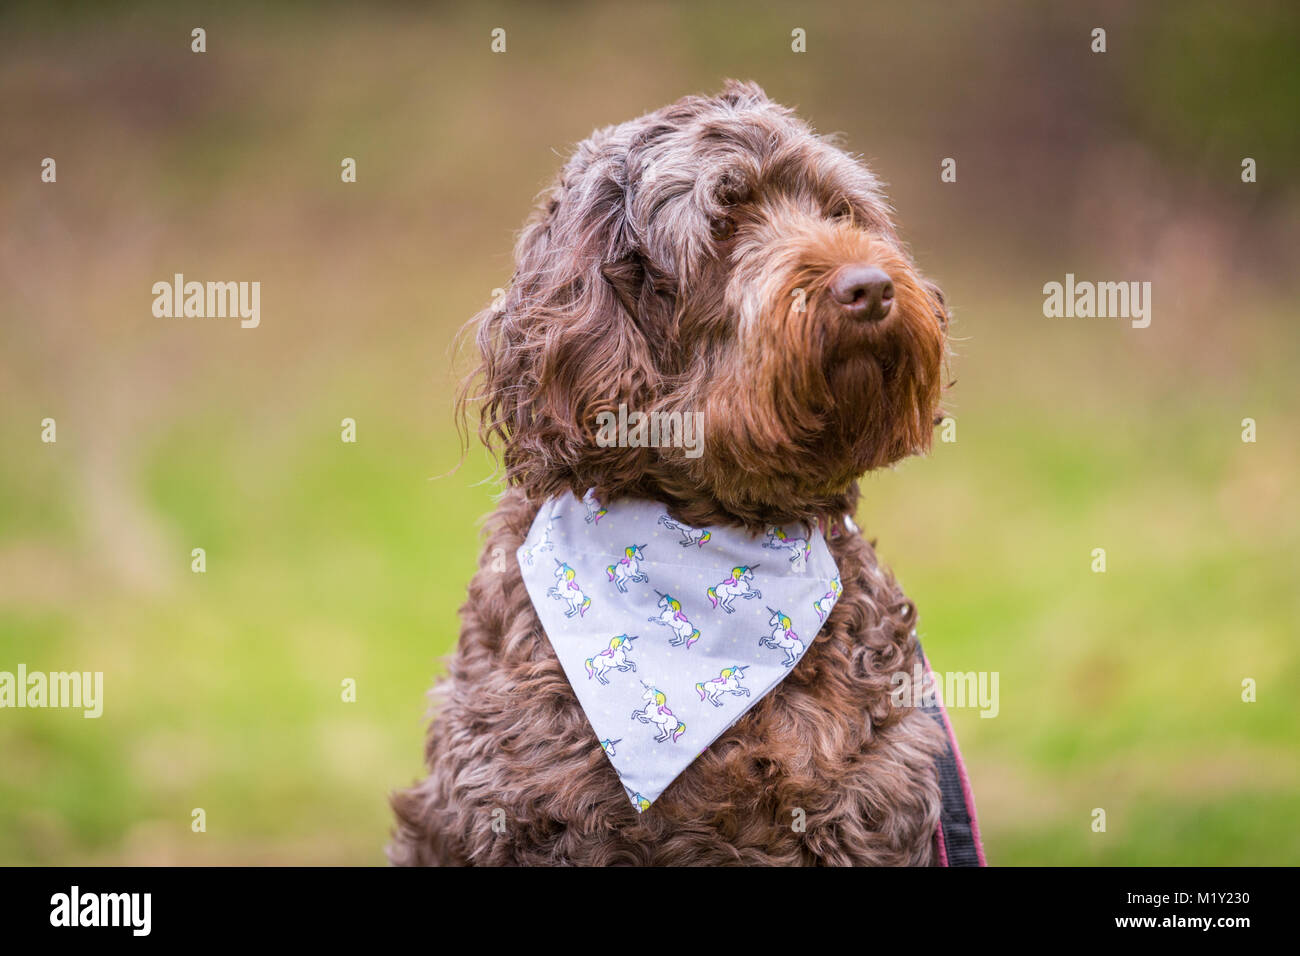 Dog sitting in park under control wearing a bandana Stock Photo